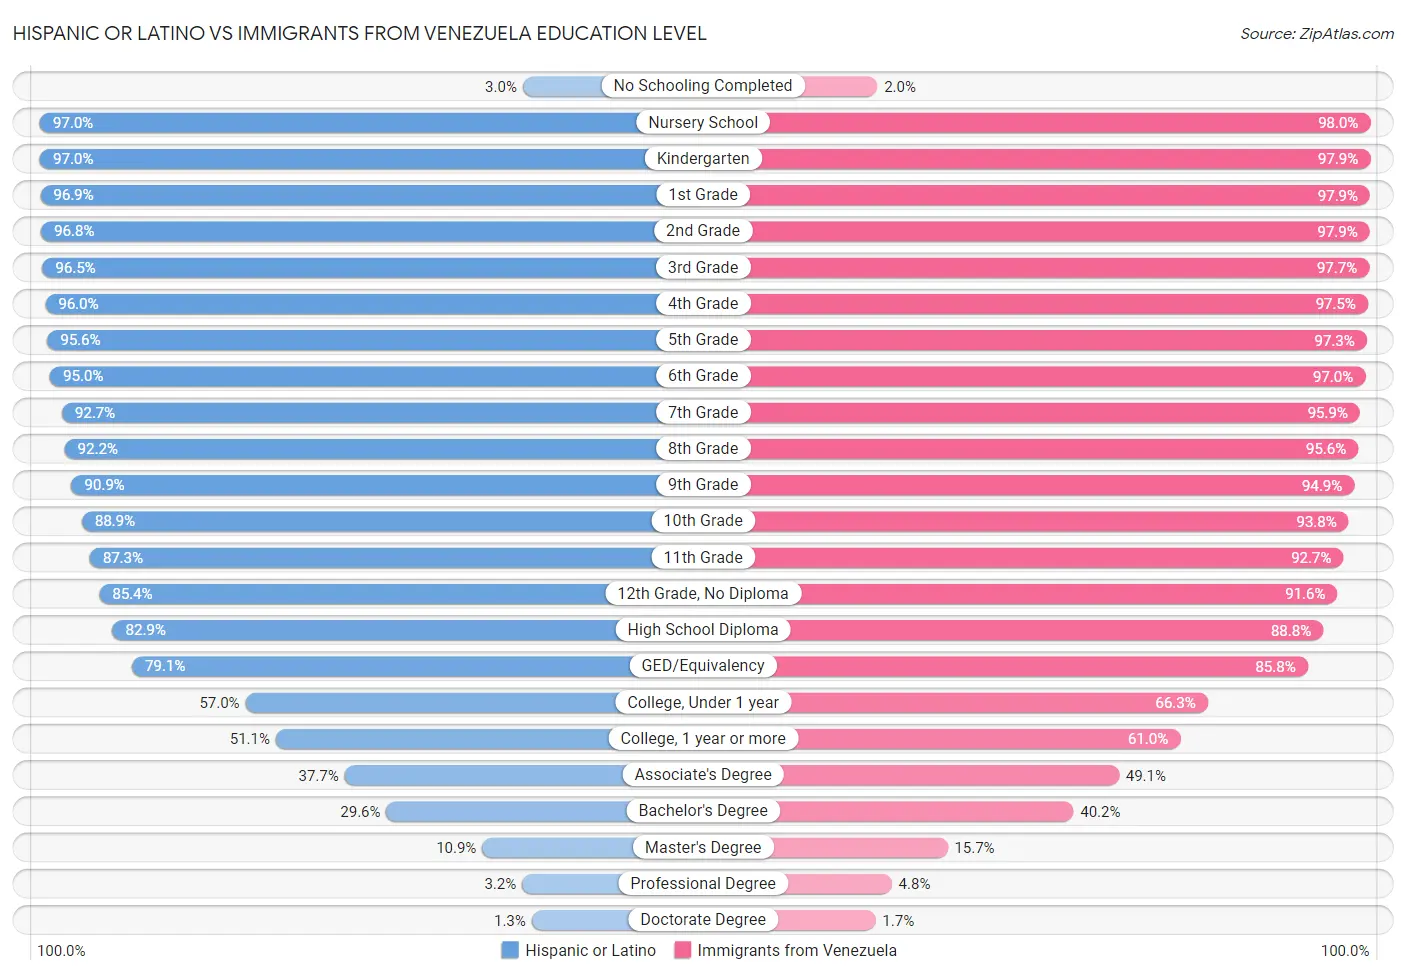 Hispanic or Latino vs Immigrants from Venezuela Education Level